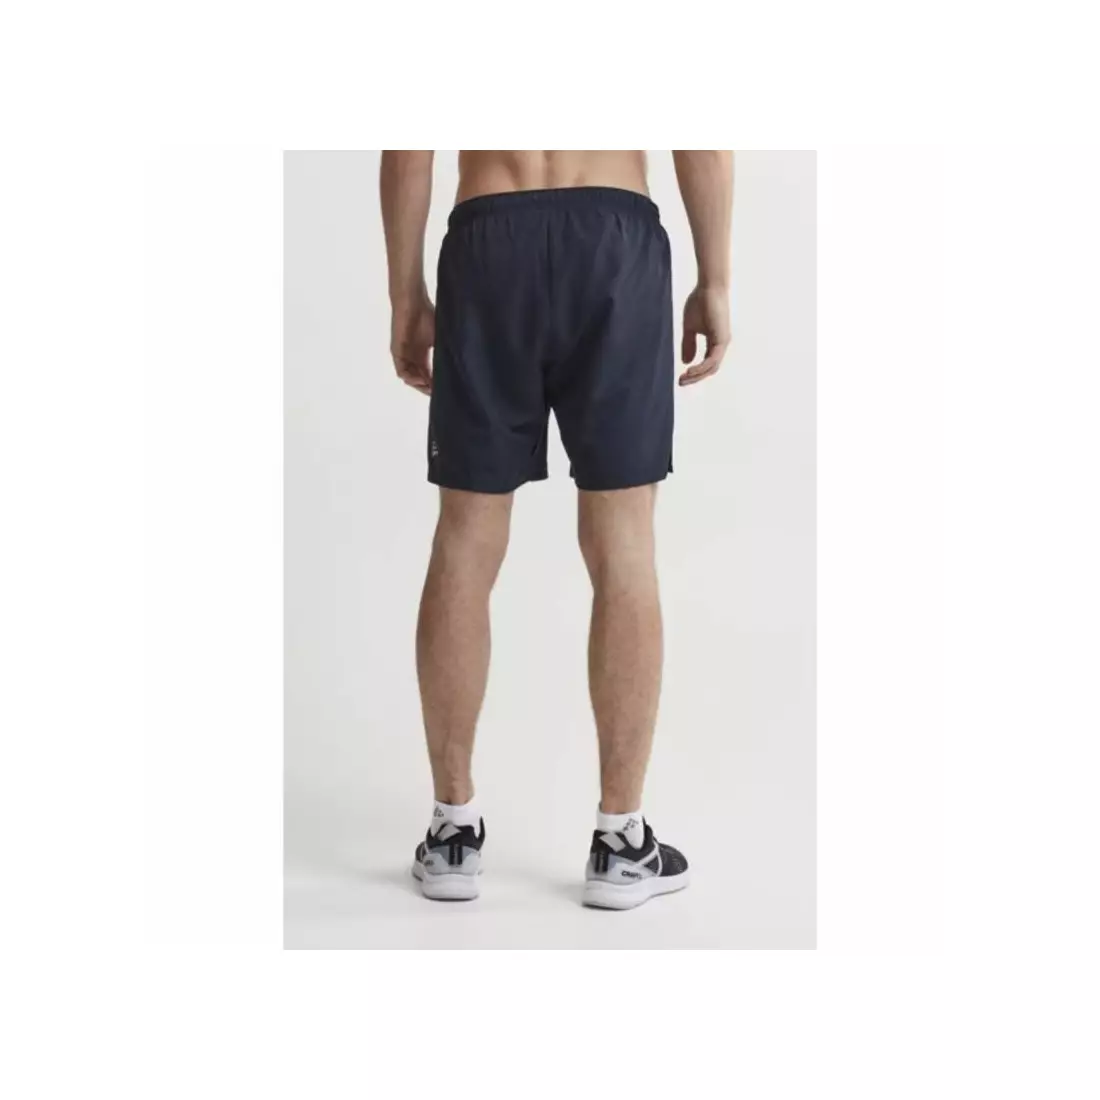 CRAFT EAZE WOVEN men's training shorts for running 1907052-396000